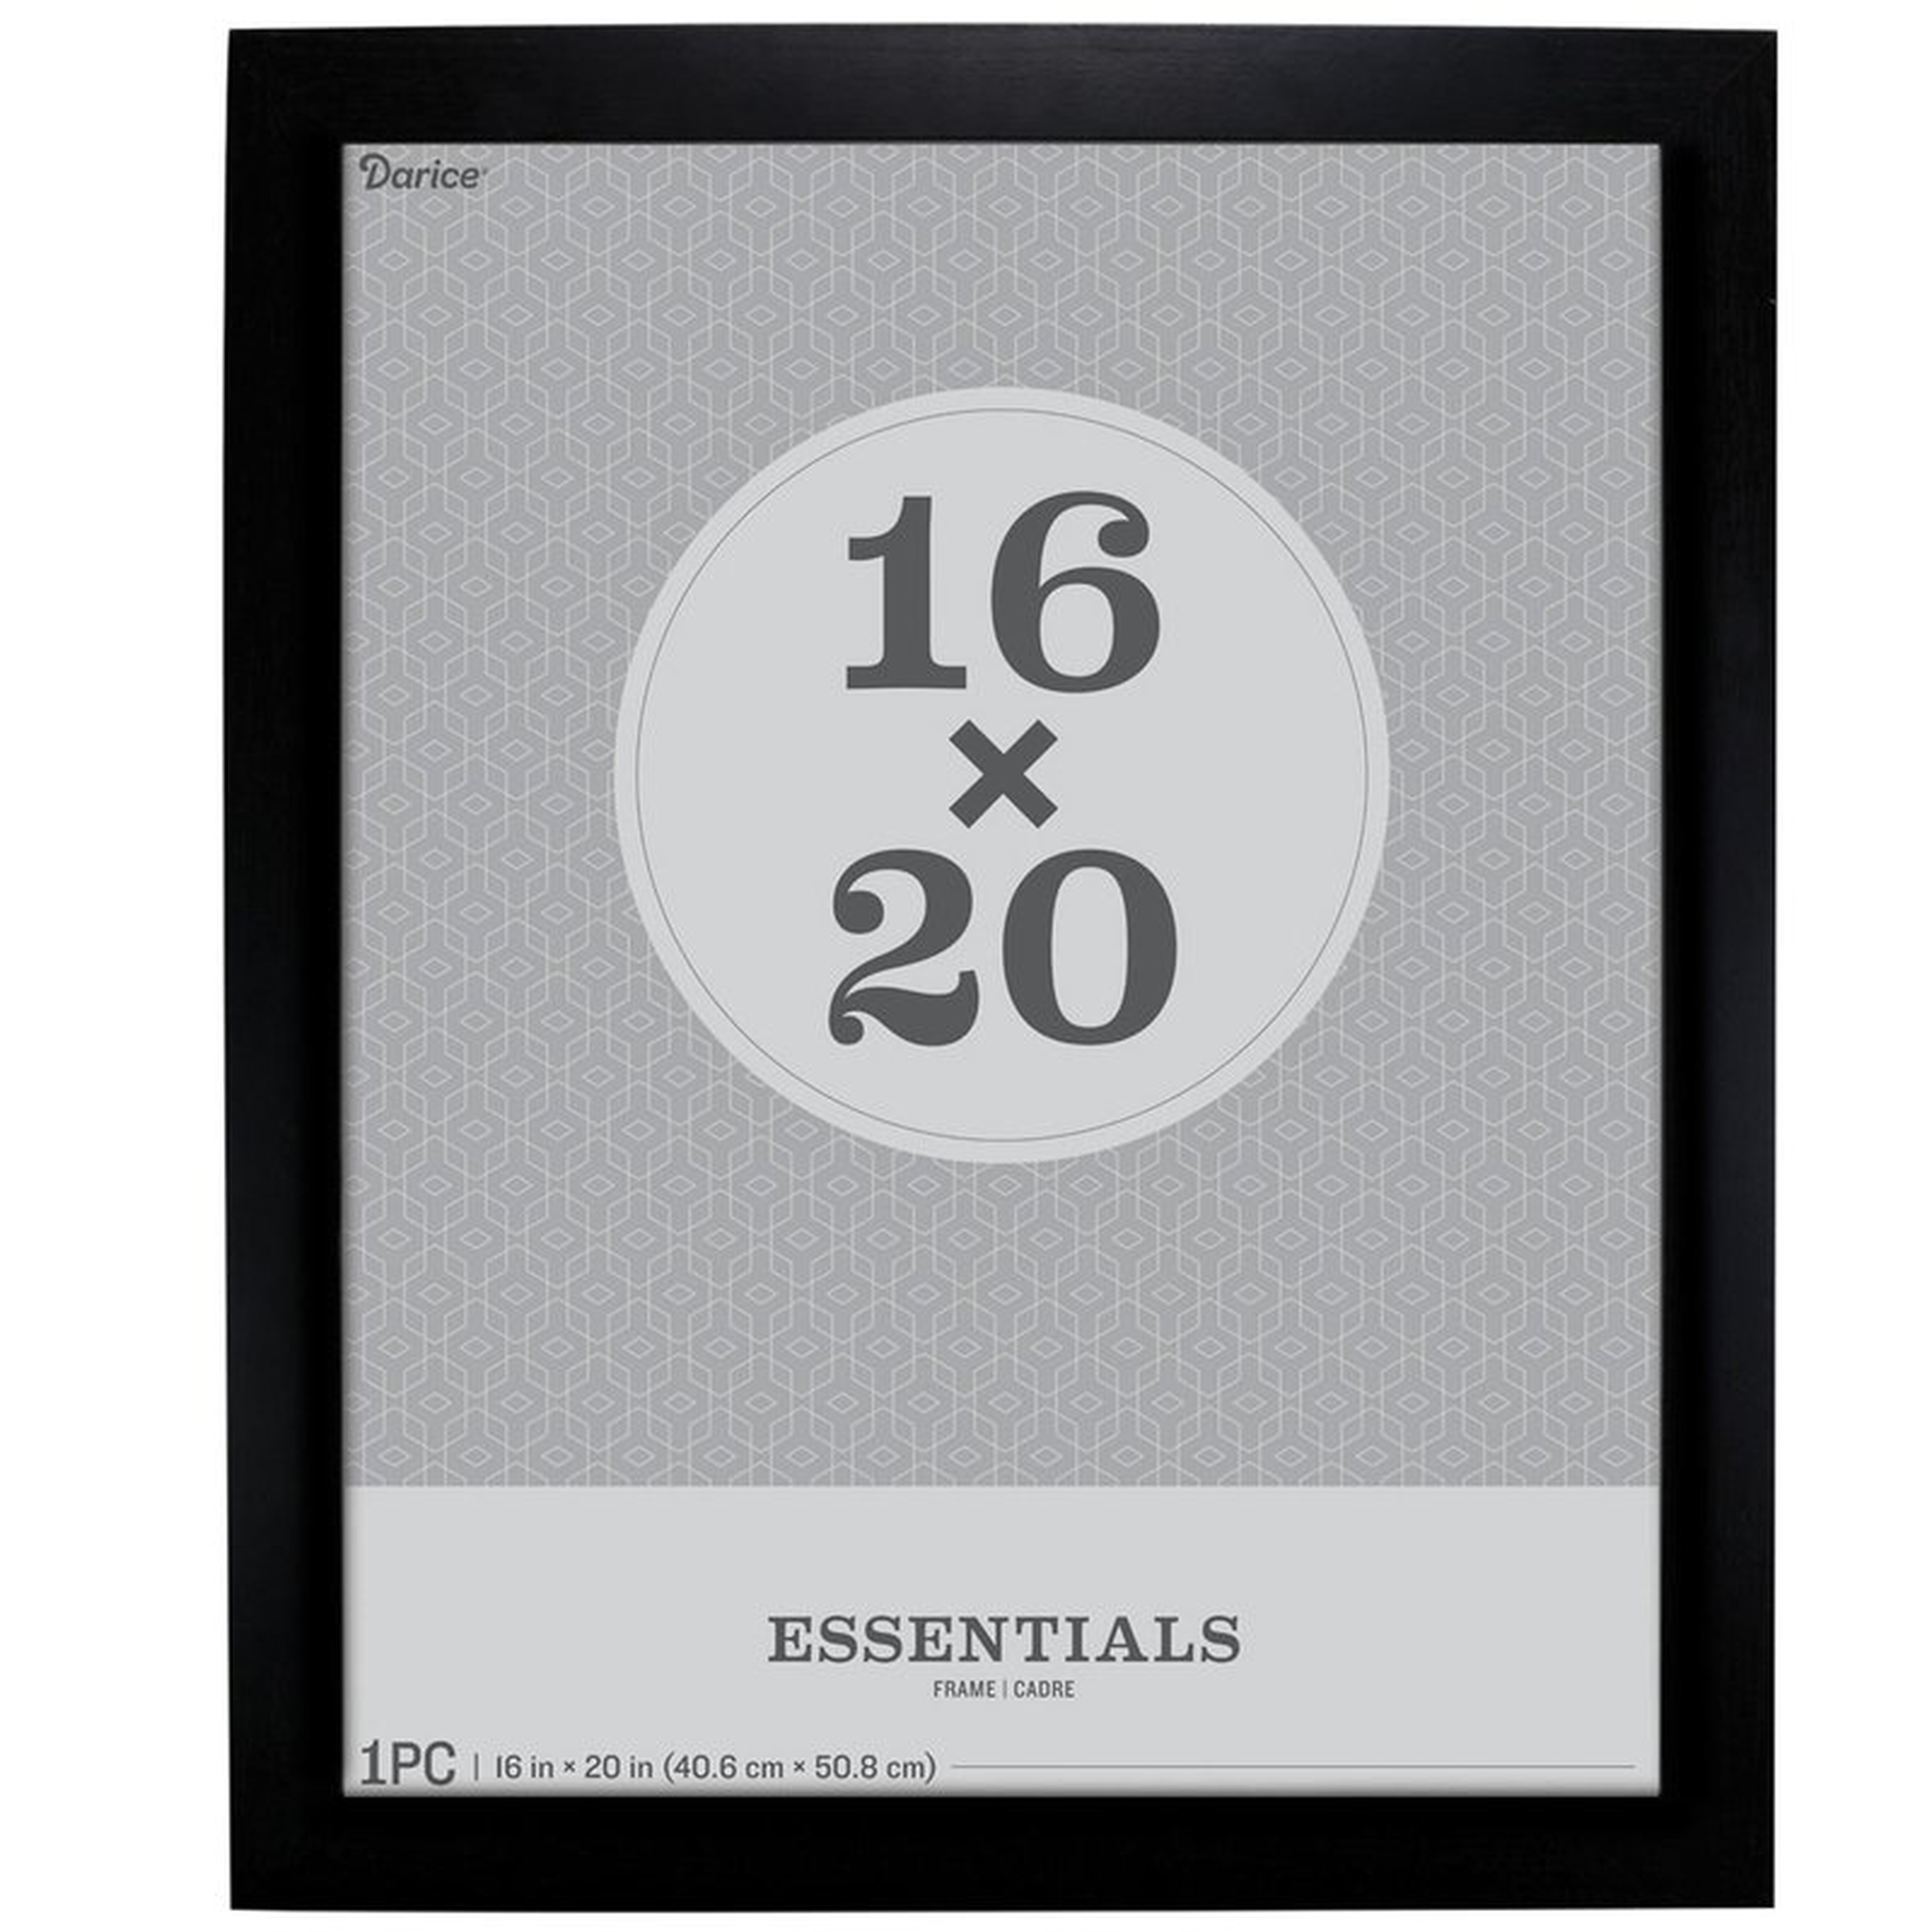 Rosetta Essentials Picture Frame, 16x20, black - Wayfair